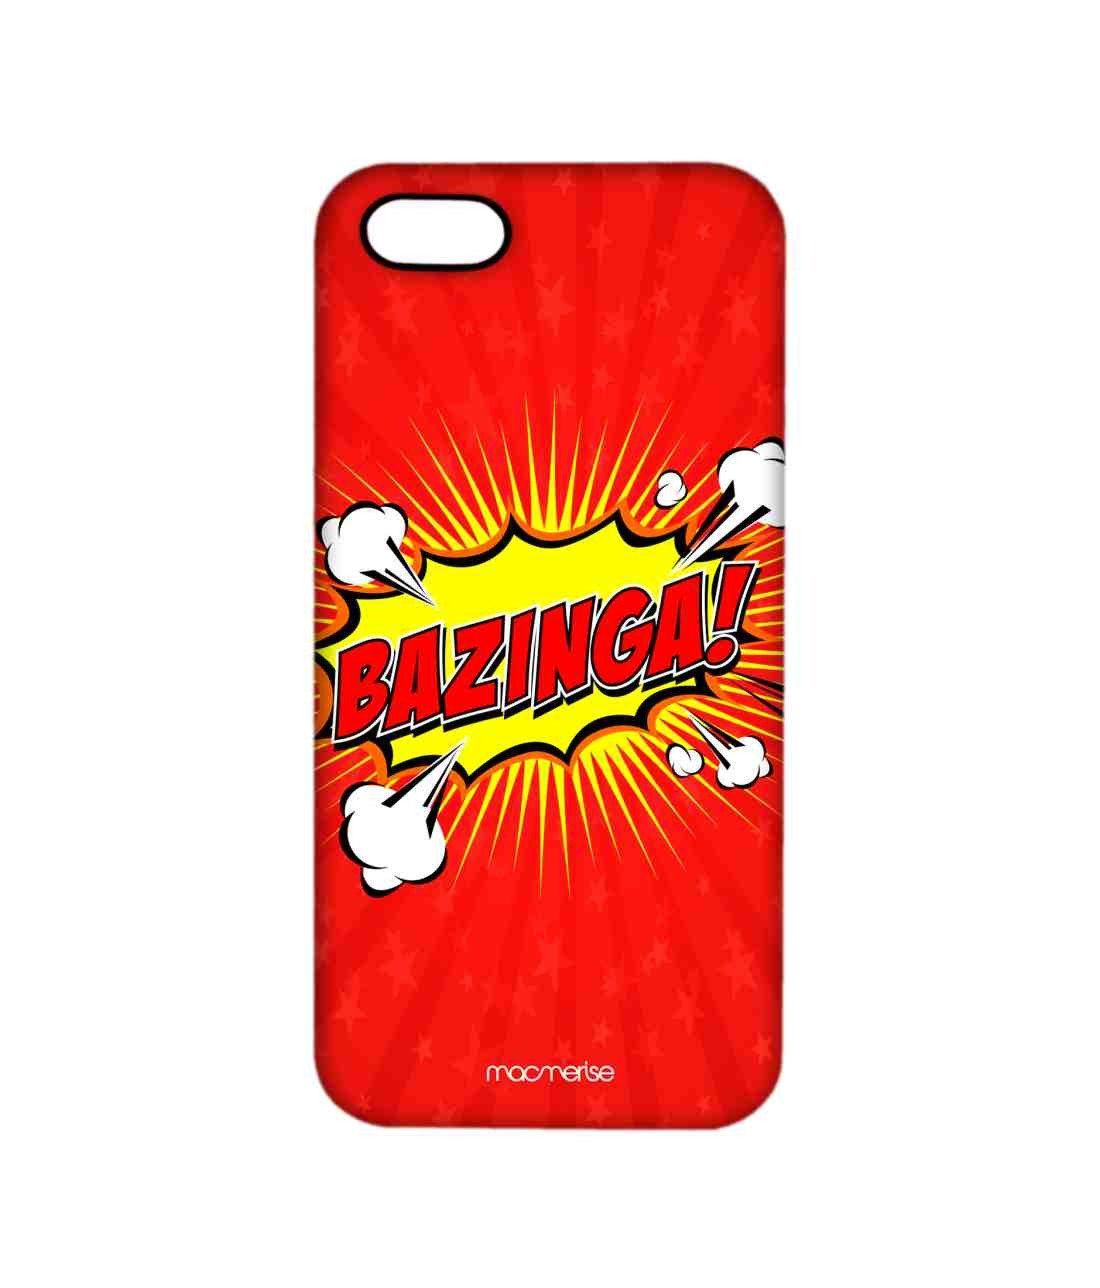 Bazinga - Sleek Phone Case for iPhone 5/5S